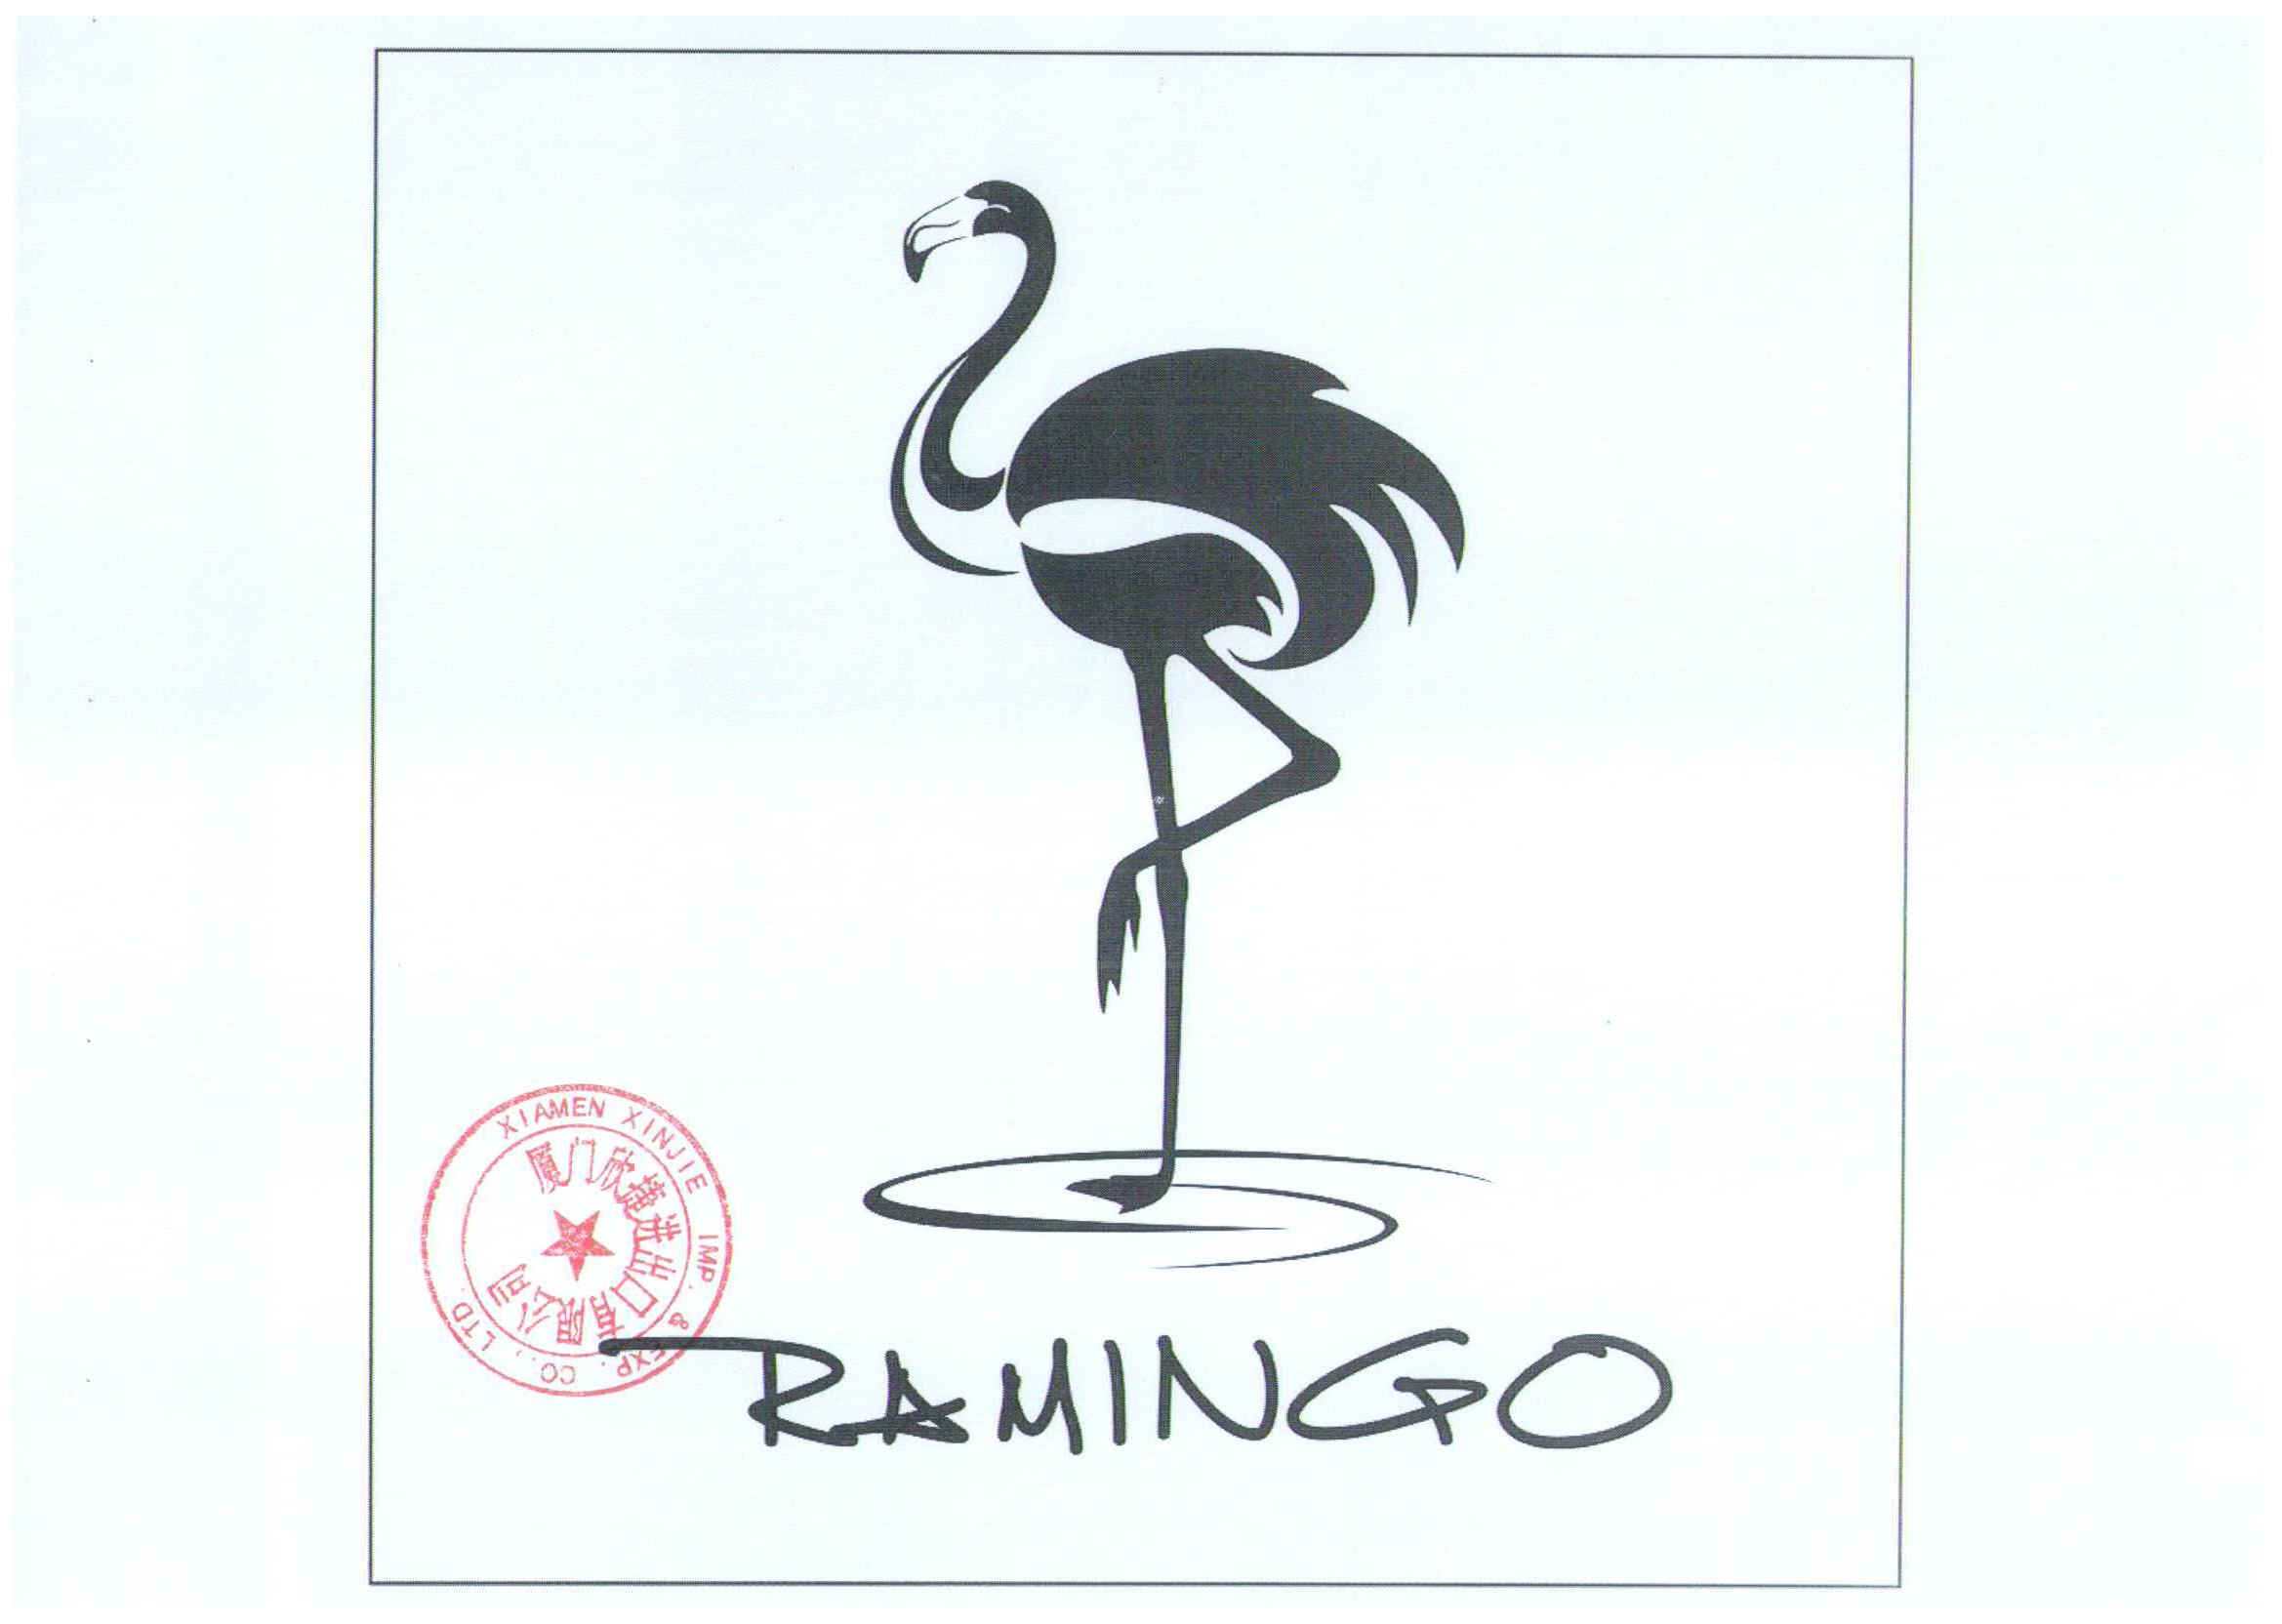 RAMINGO